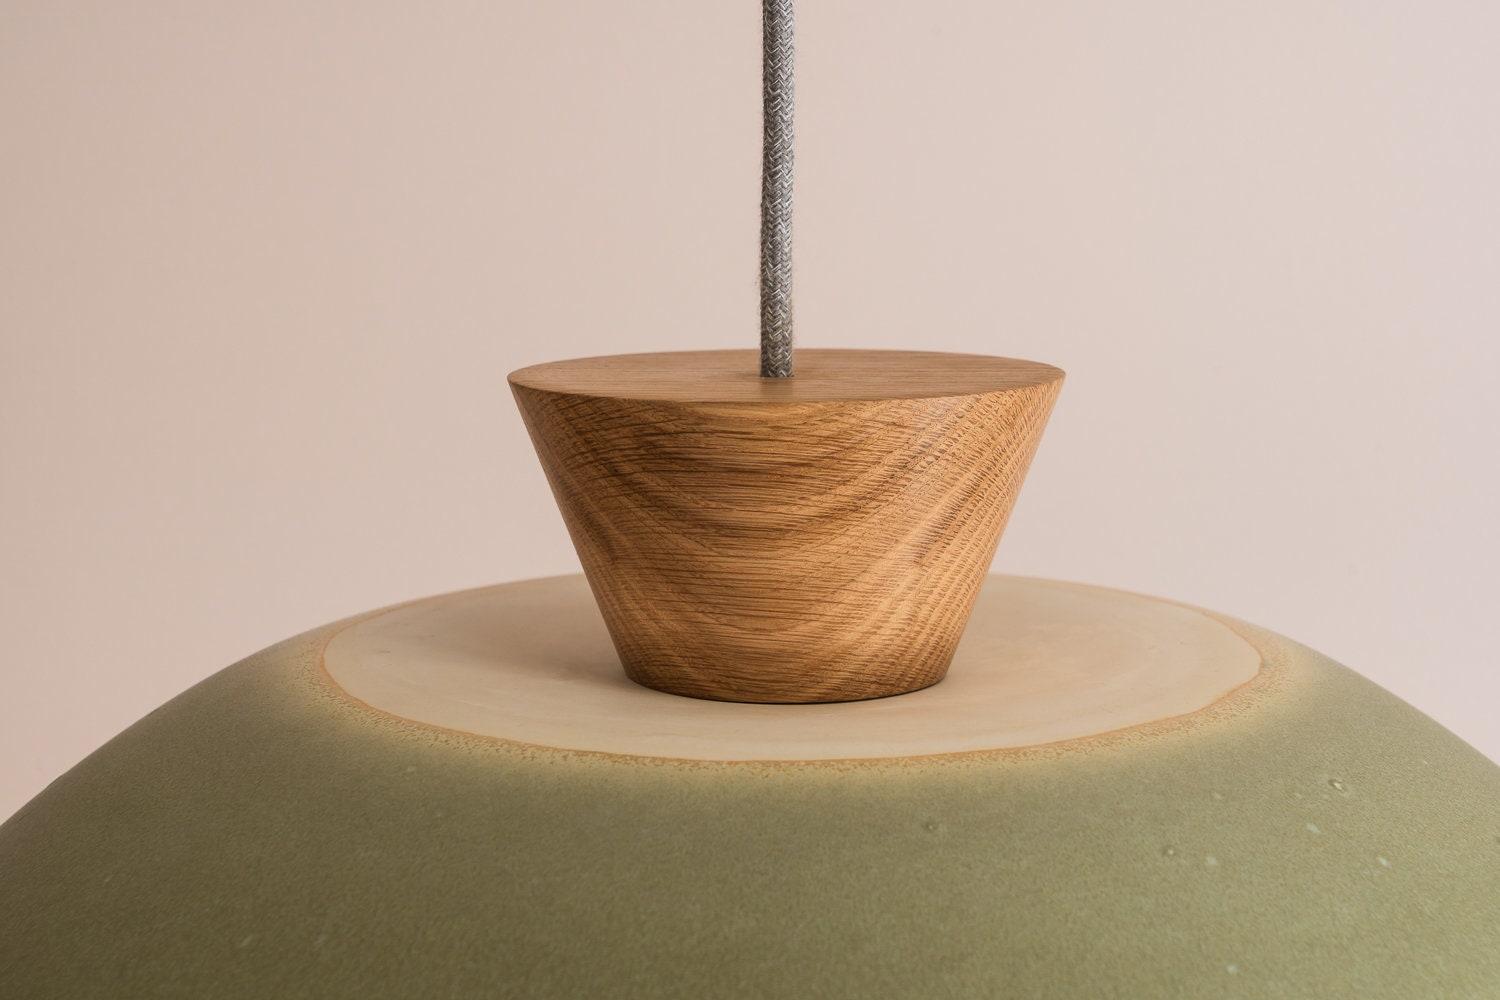 Green XL Dawn Pendant Light in Ceramic and Oak by StudioHaran